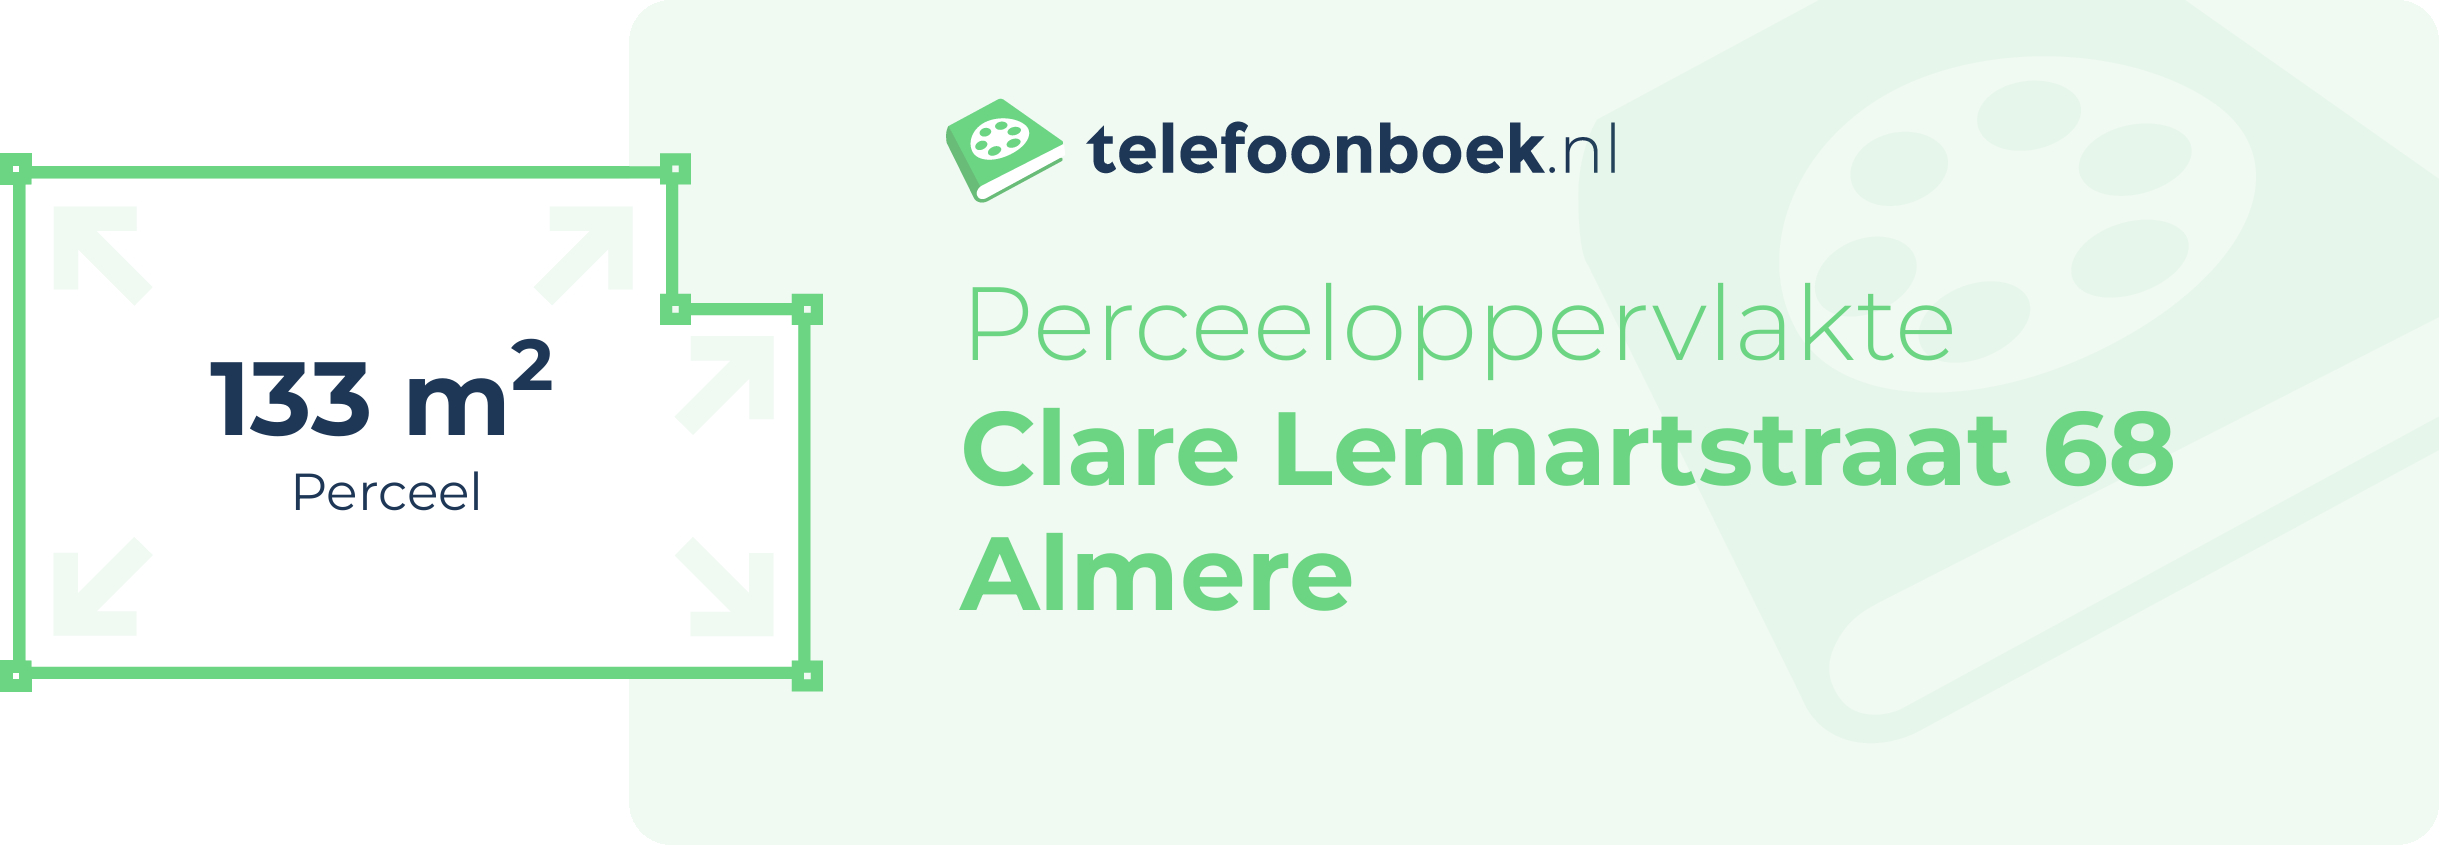 Perceeloppervlakte Clare Lennartstraat 68 Almere